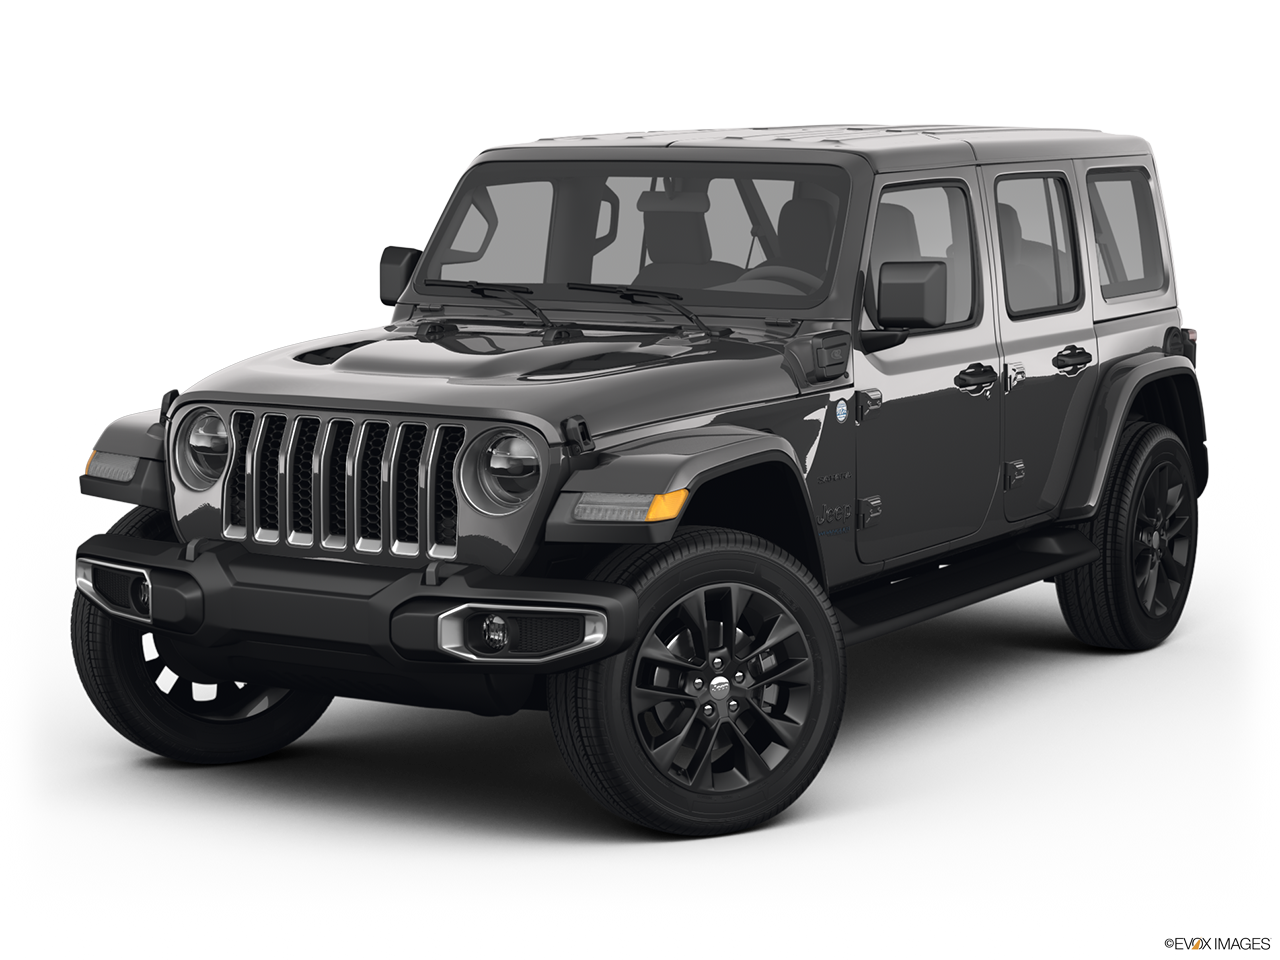 Jeep Wrangler Price And Trim Levels, Jeep Wrangler FAQ